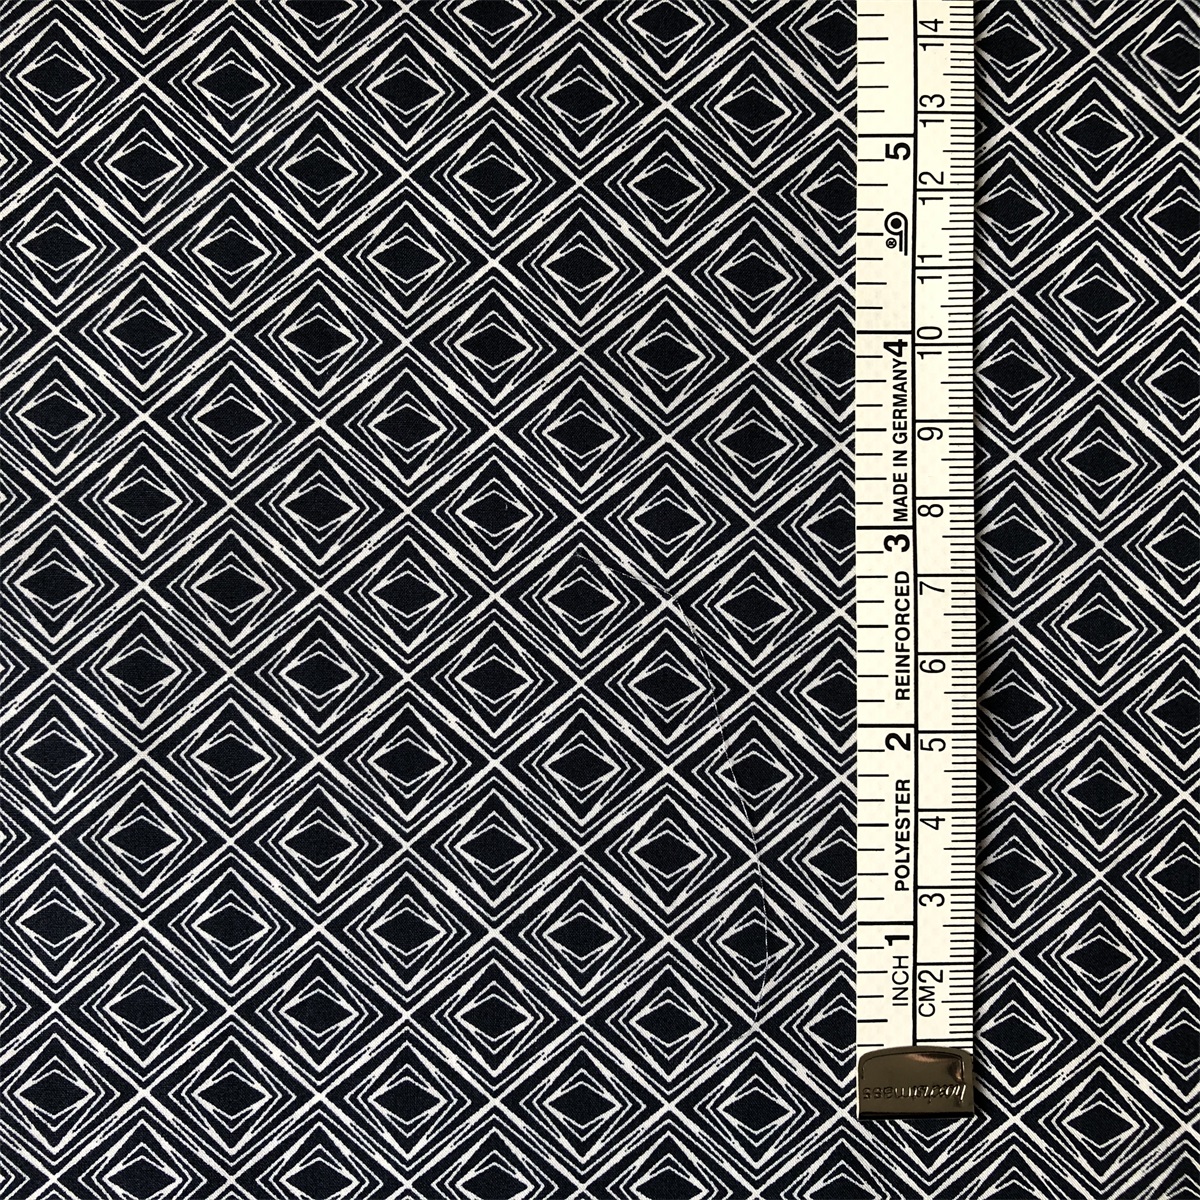 Sun-rising Textile Cotton Printed fabric 60S compact yarn soft comfortable men's shirts 100% cotton poplin printed shirts fabric